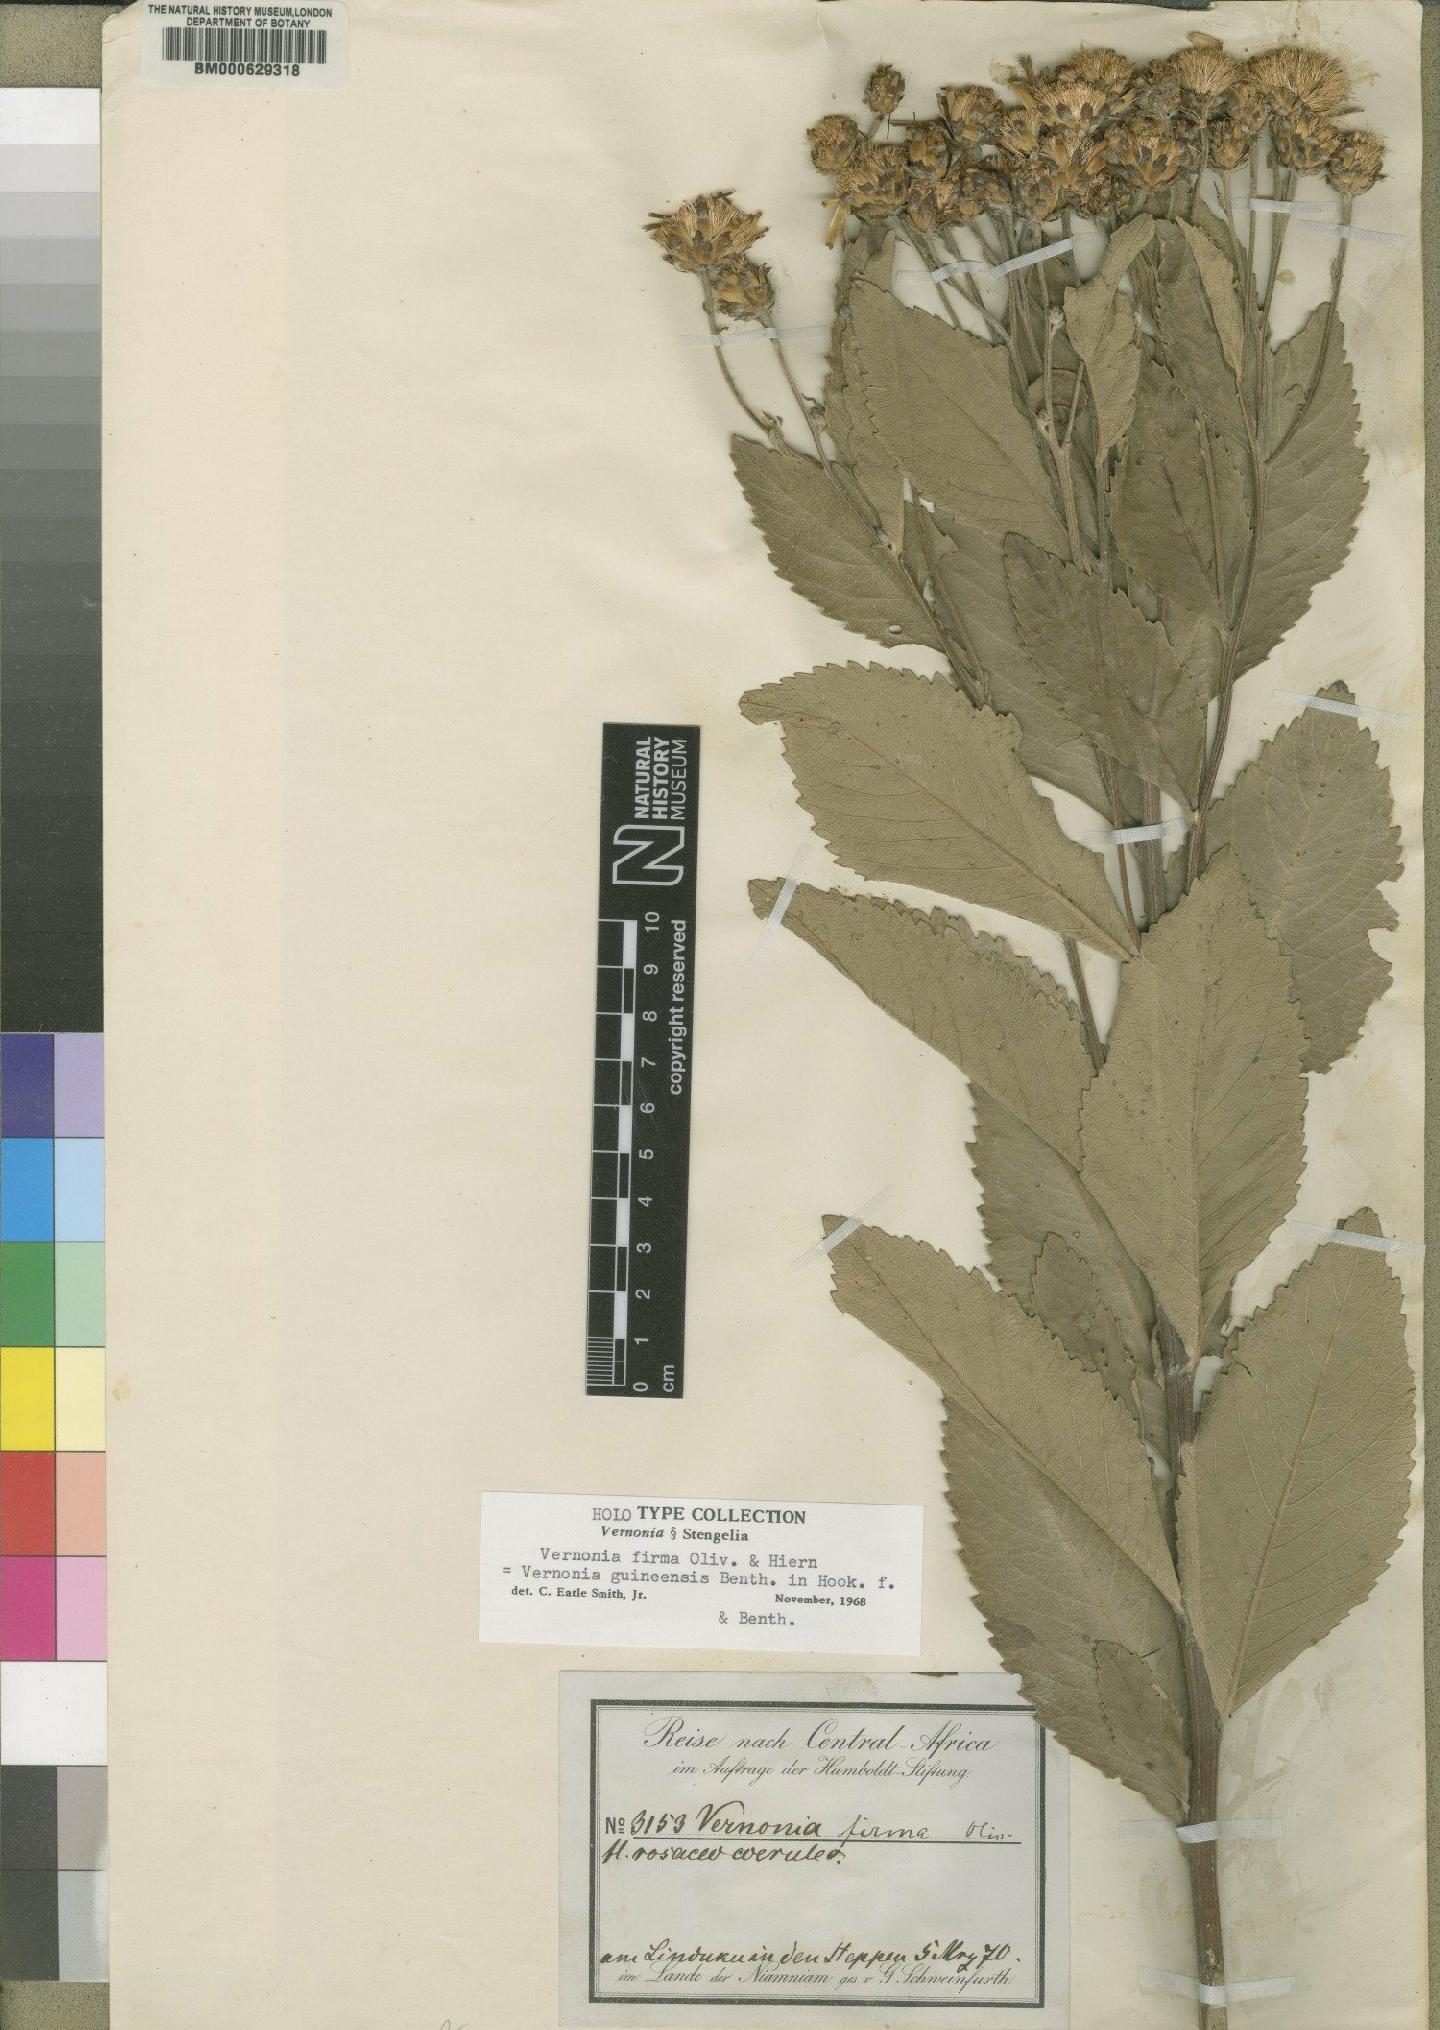 To NHMUK collection (Vernonia guineensis Benth.; Holotype; NHMUK:ecatalogue:4528549)